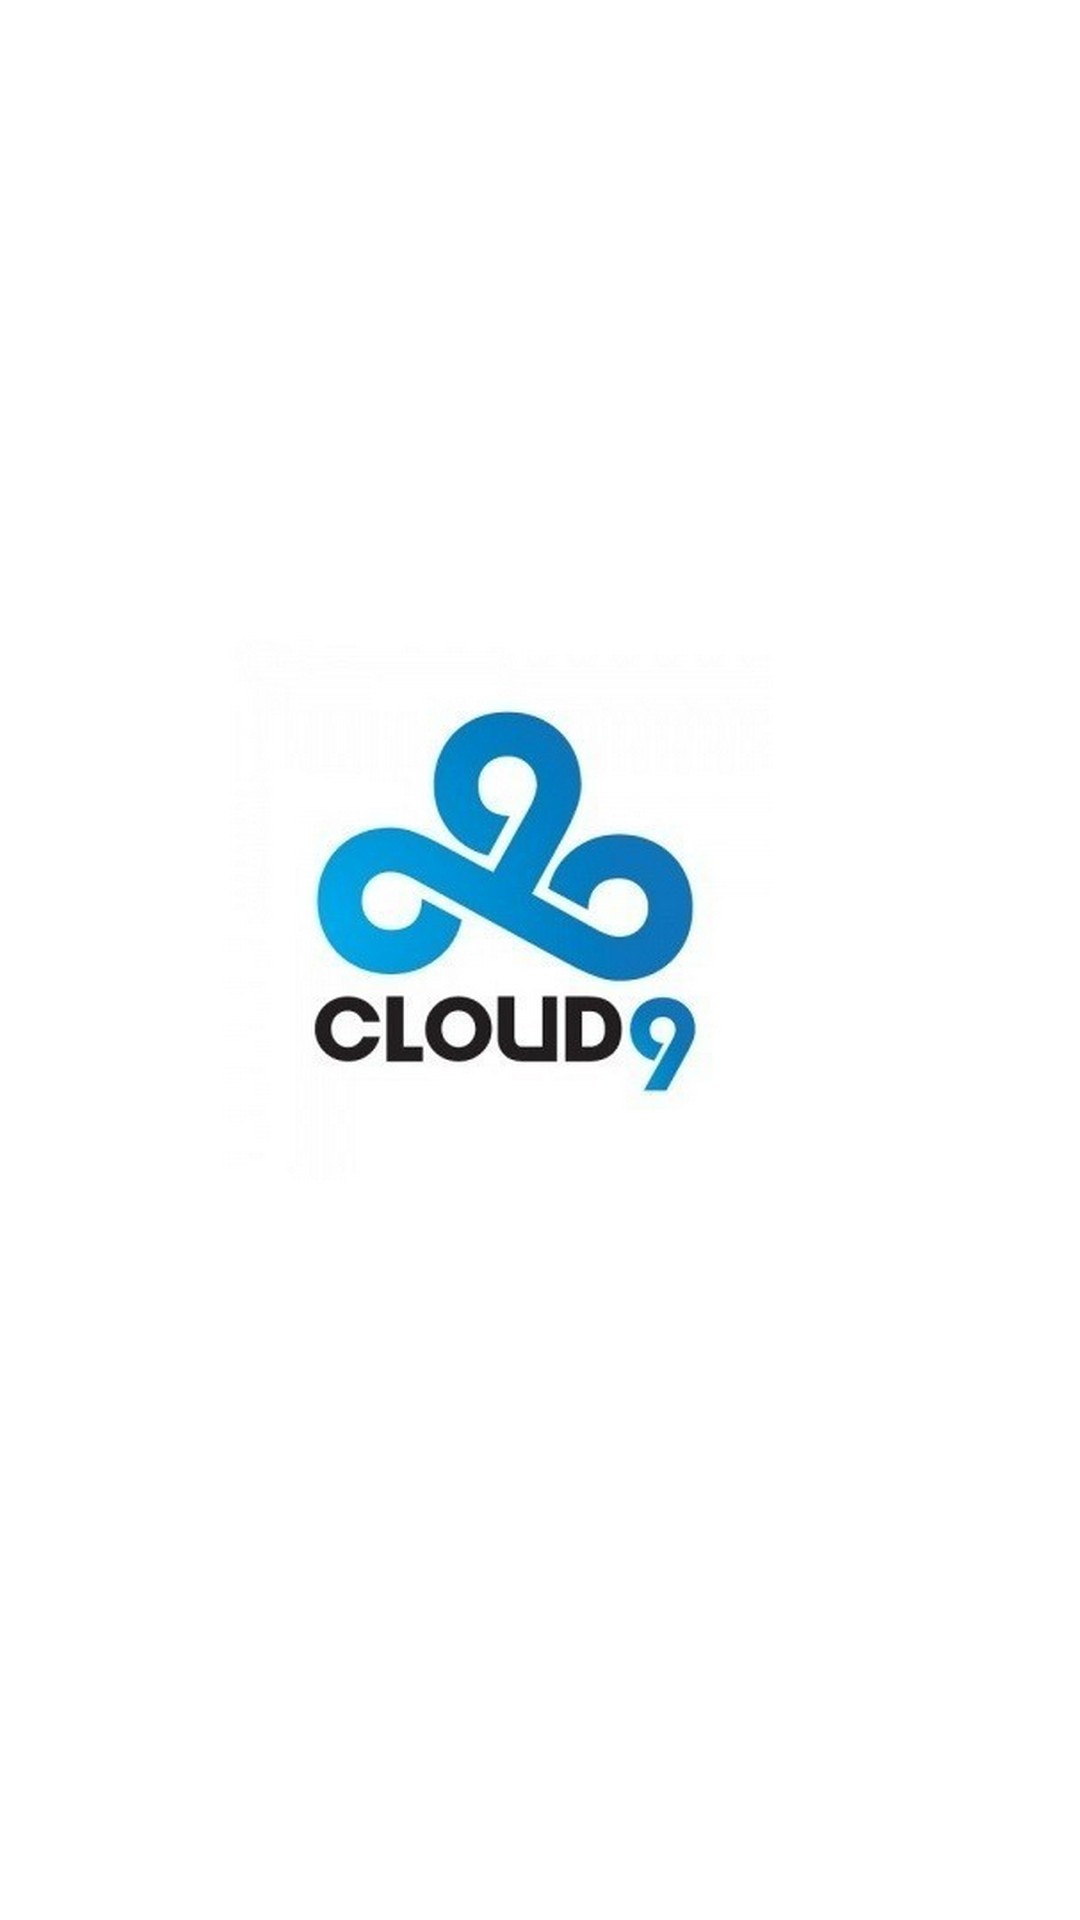 Cloud 9 Wallpaper For Lock Screen 1080x1920